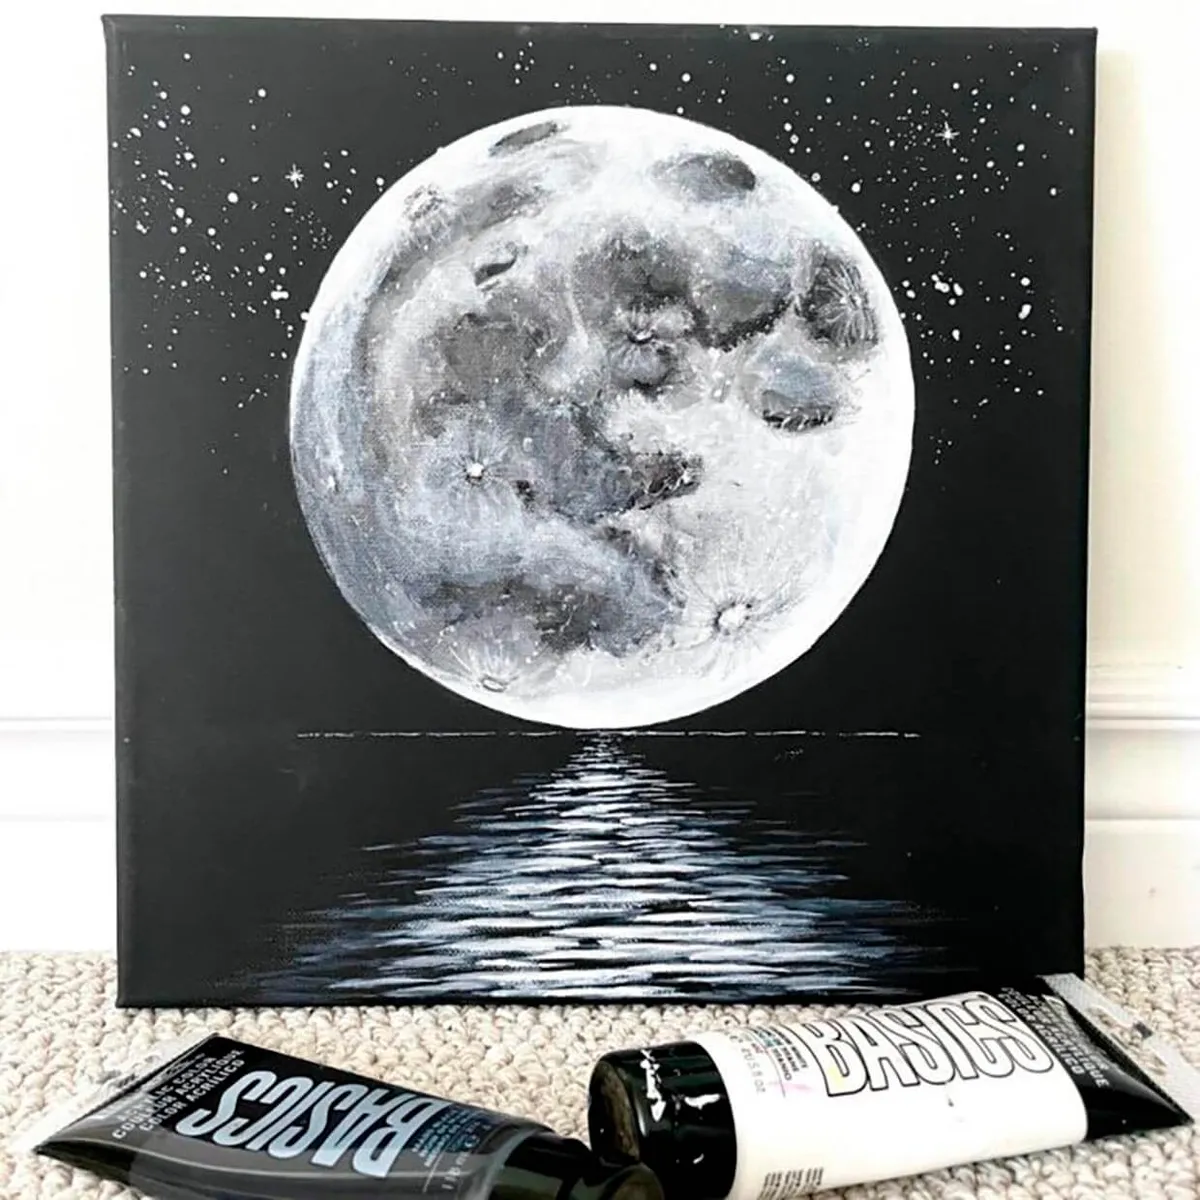 Moon canvas painting ideas